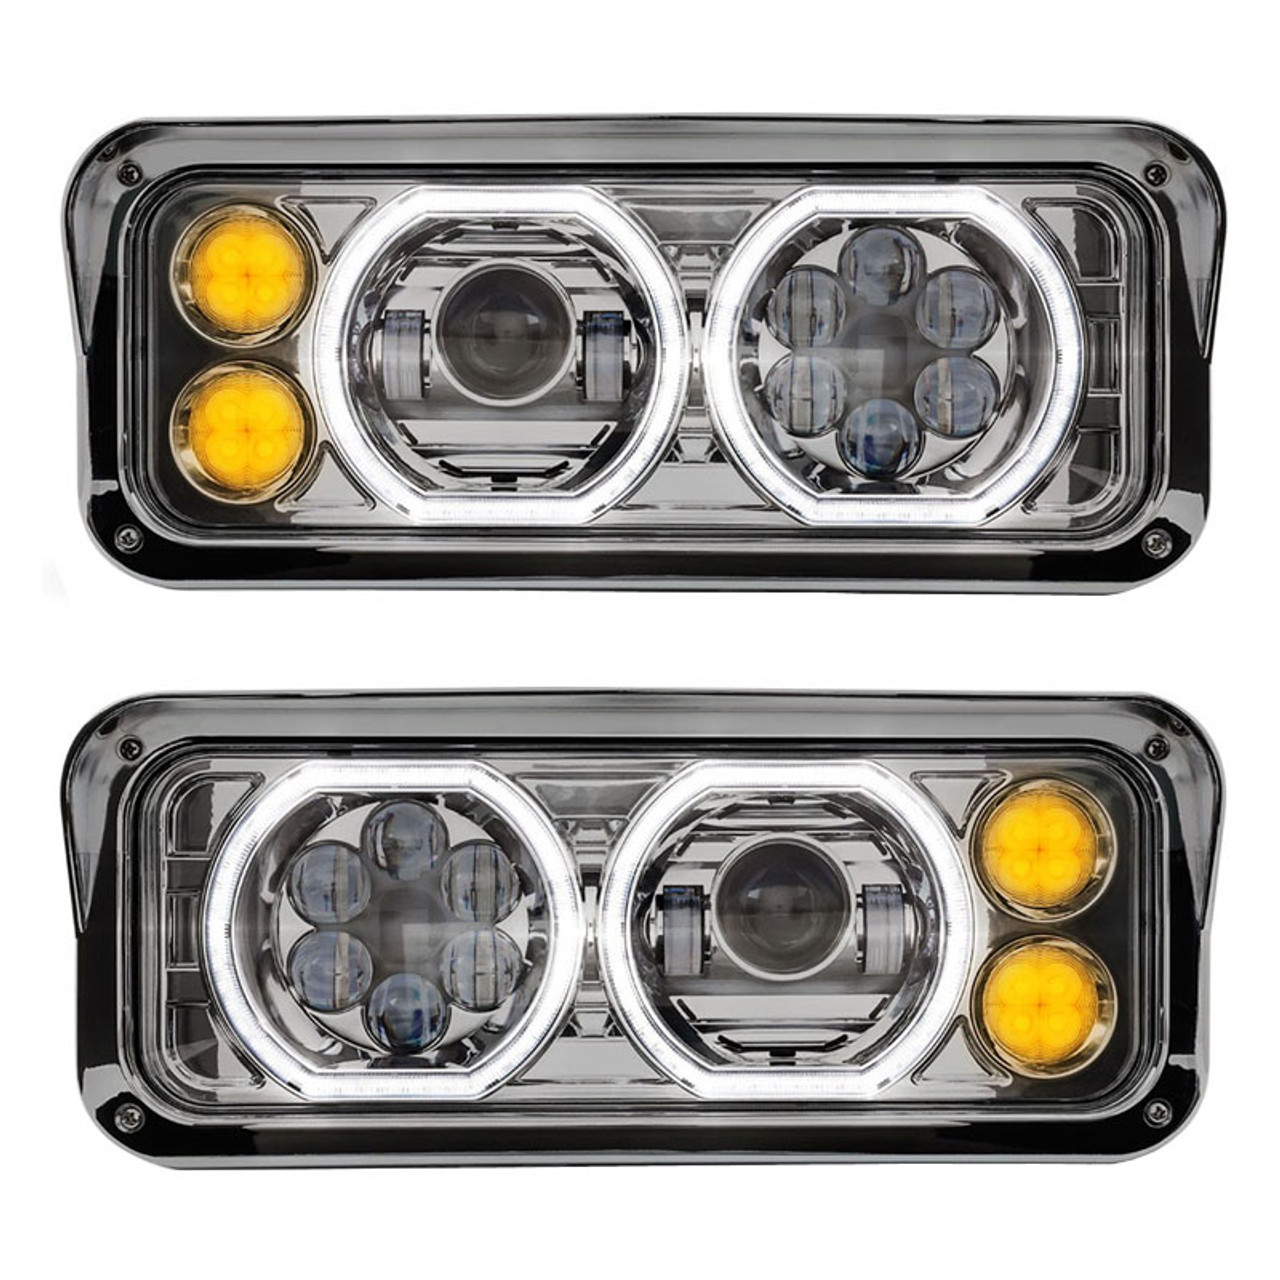 4x LED Headlights For Kenworth Mack Peterbilt Rectangular Headlights 357 378 379